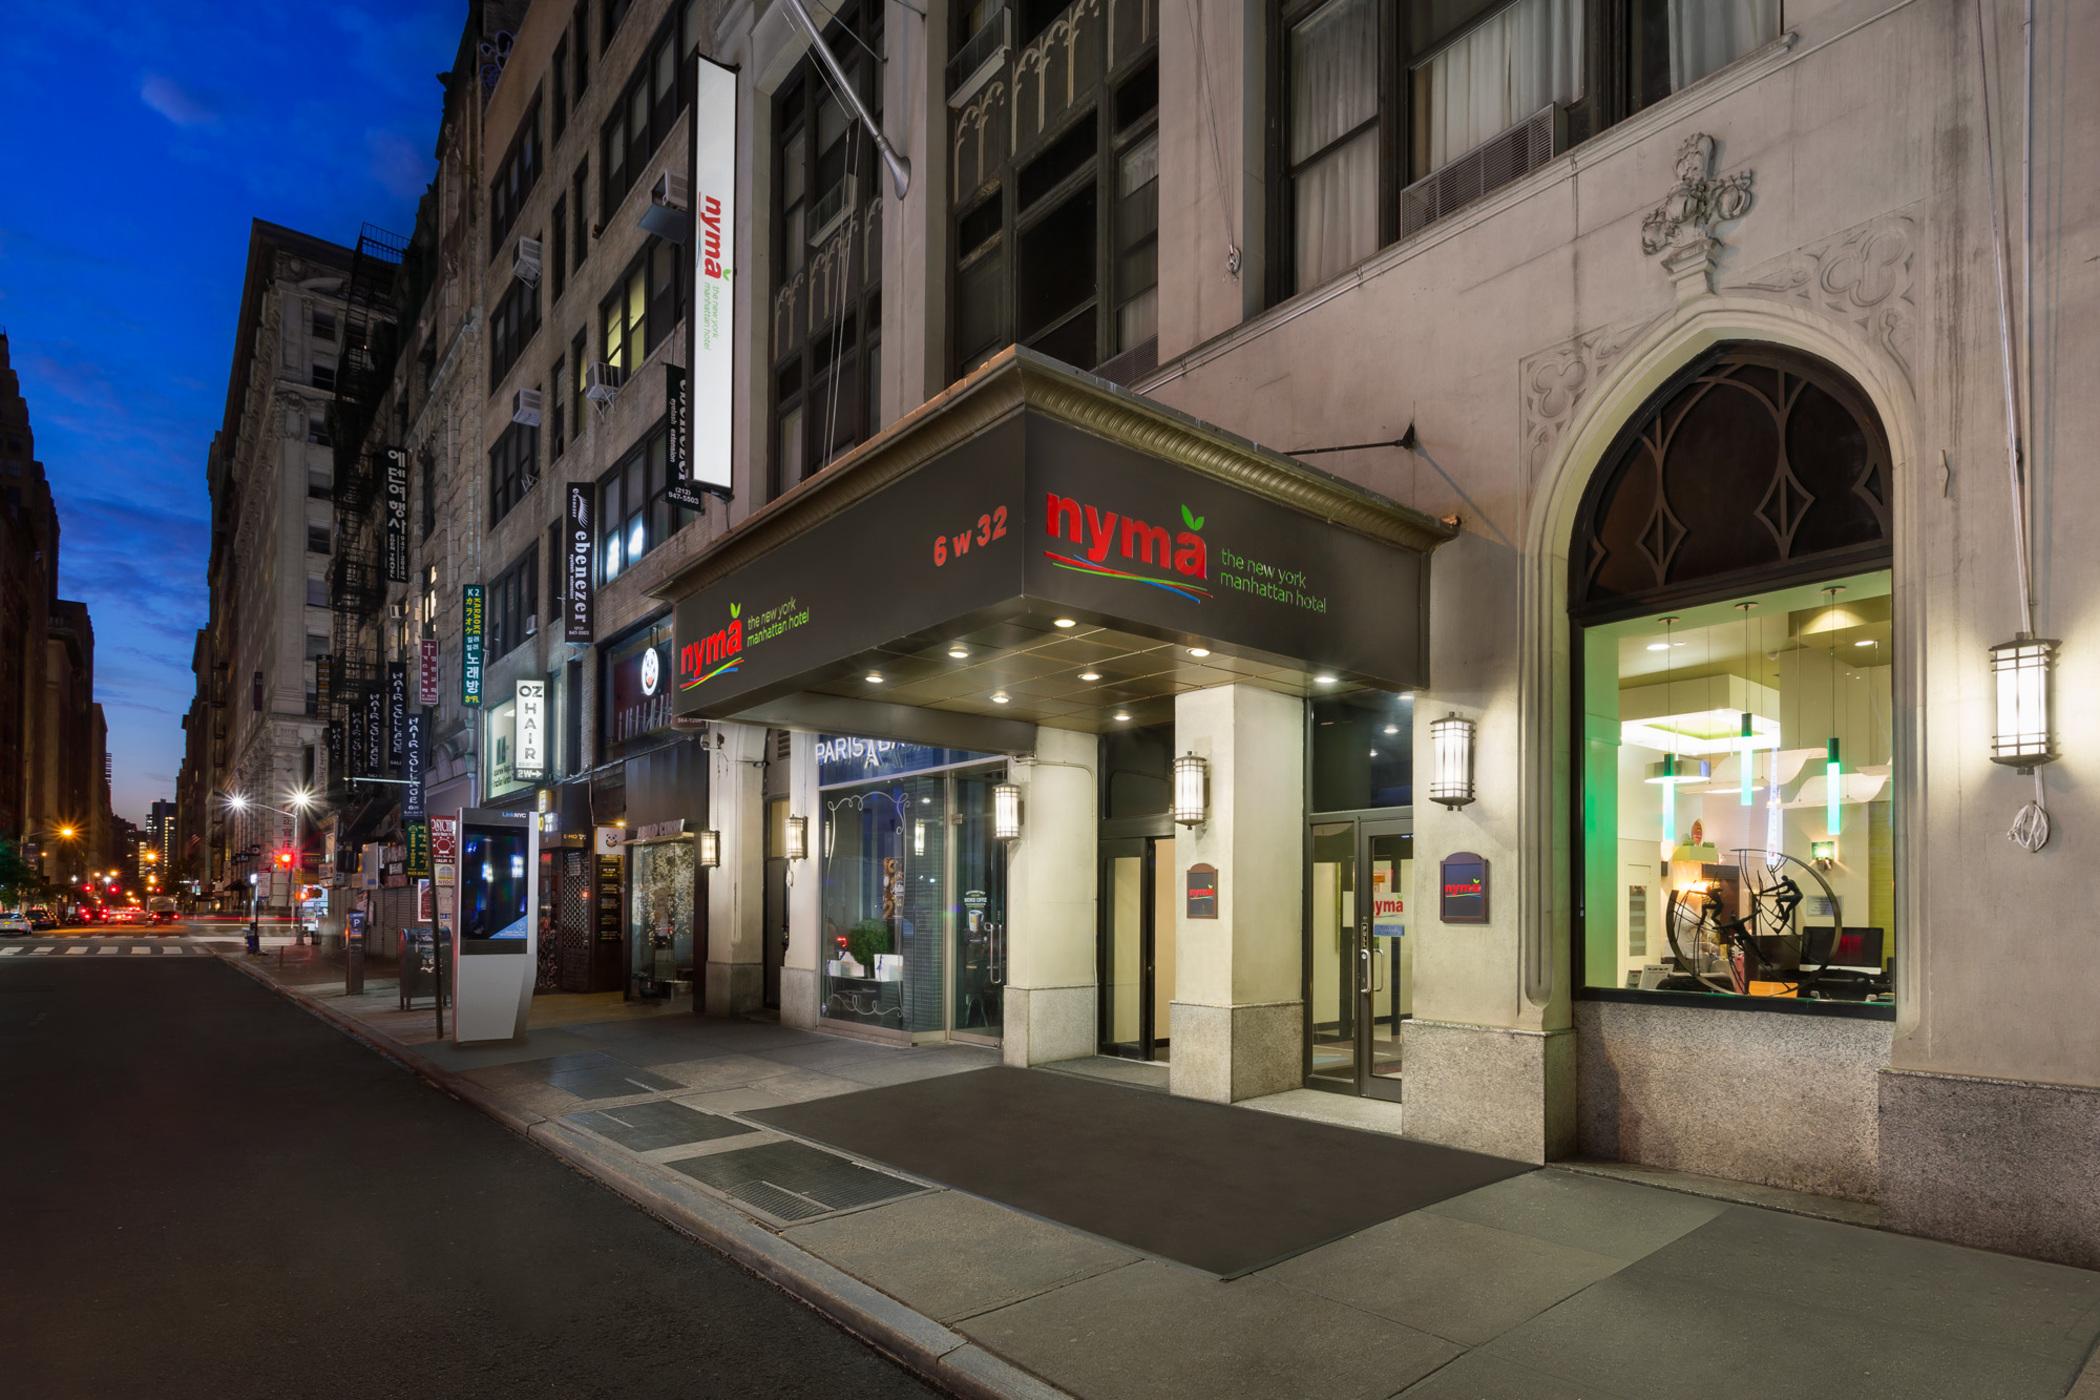 Nyma ザ ニューヨーク マンハッタン ホテル エクステリア 写真